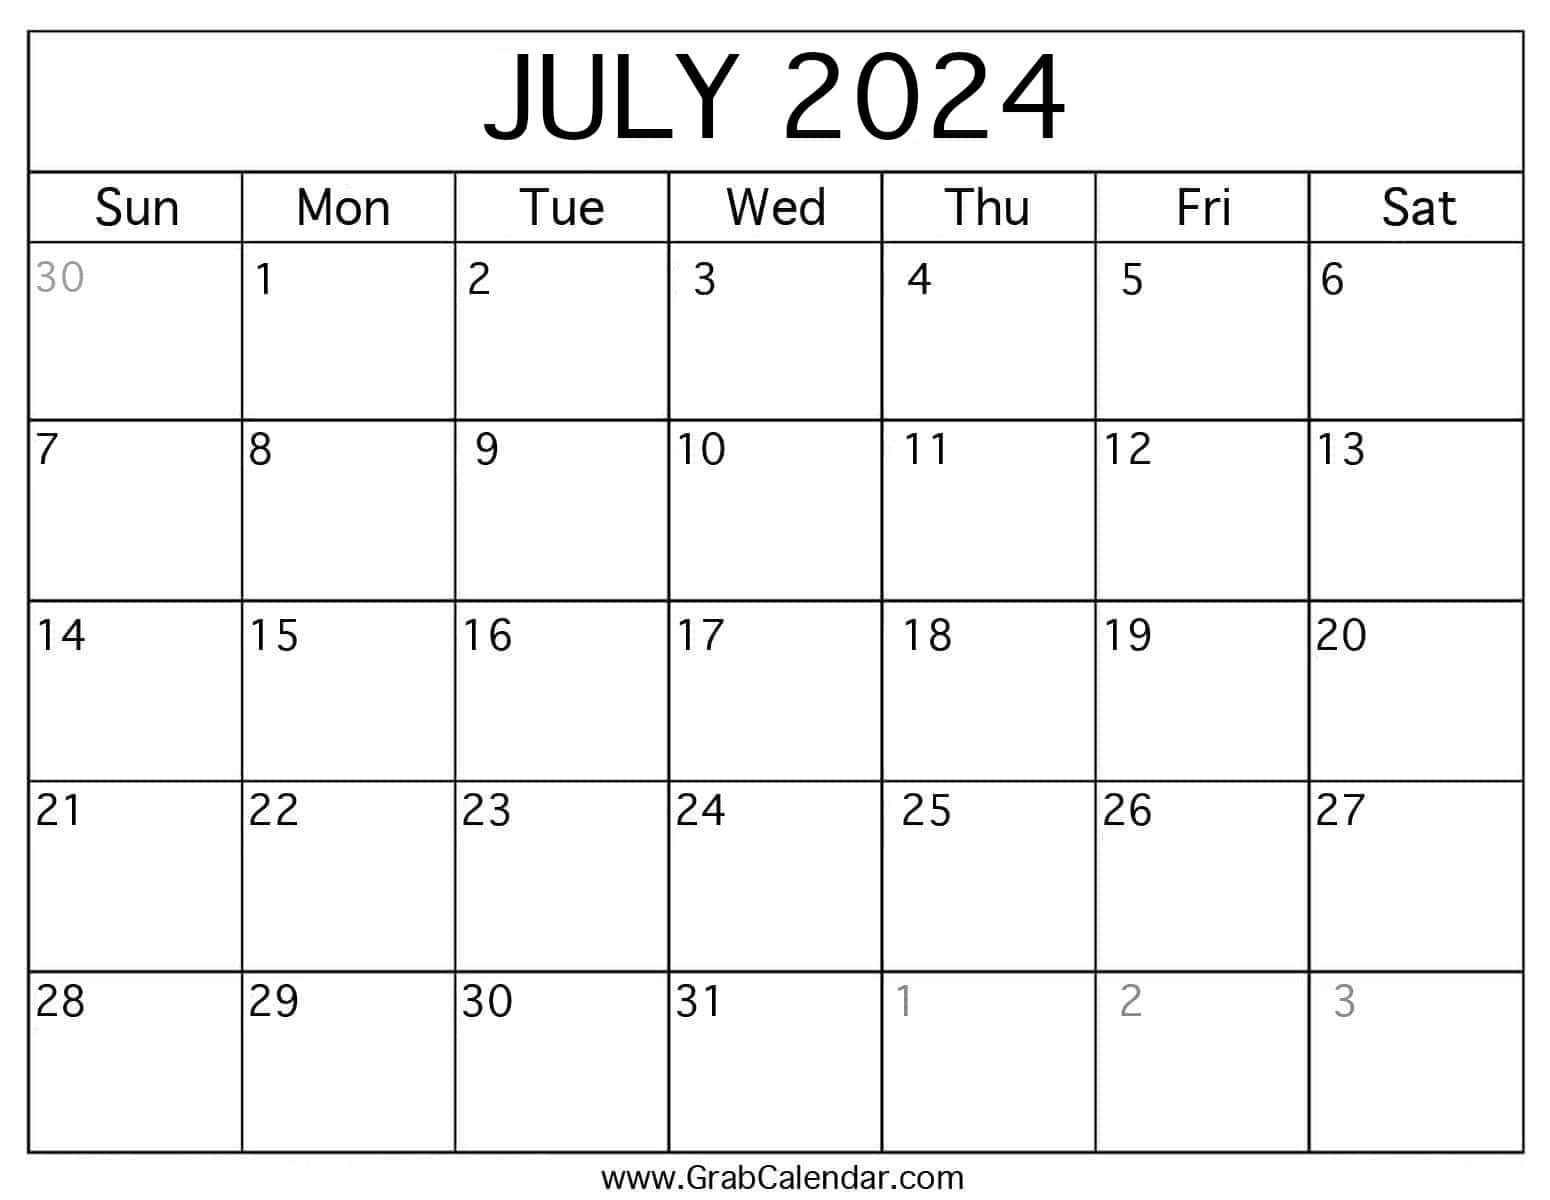 Printable July 2024 Calendar | The Calendar Of July 2024